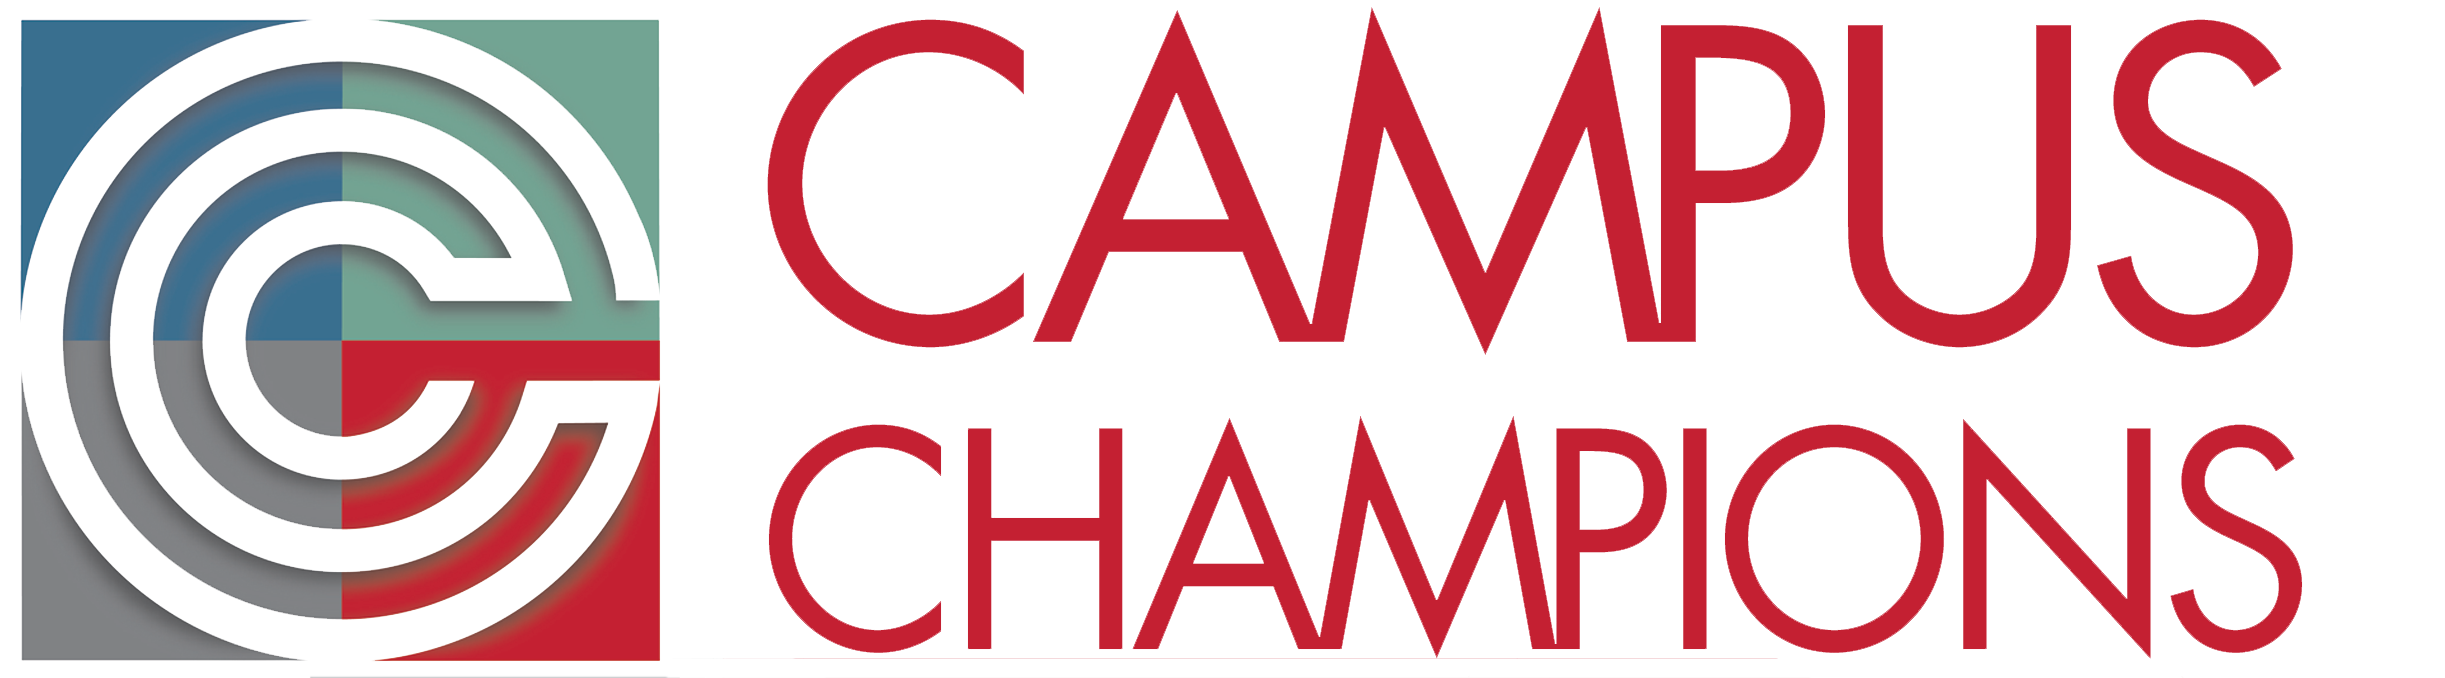 Campus Champions logo